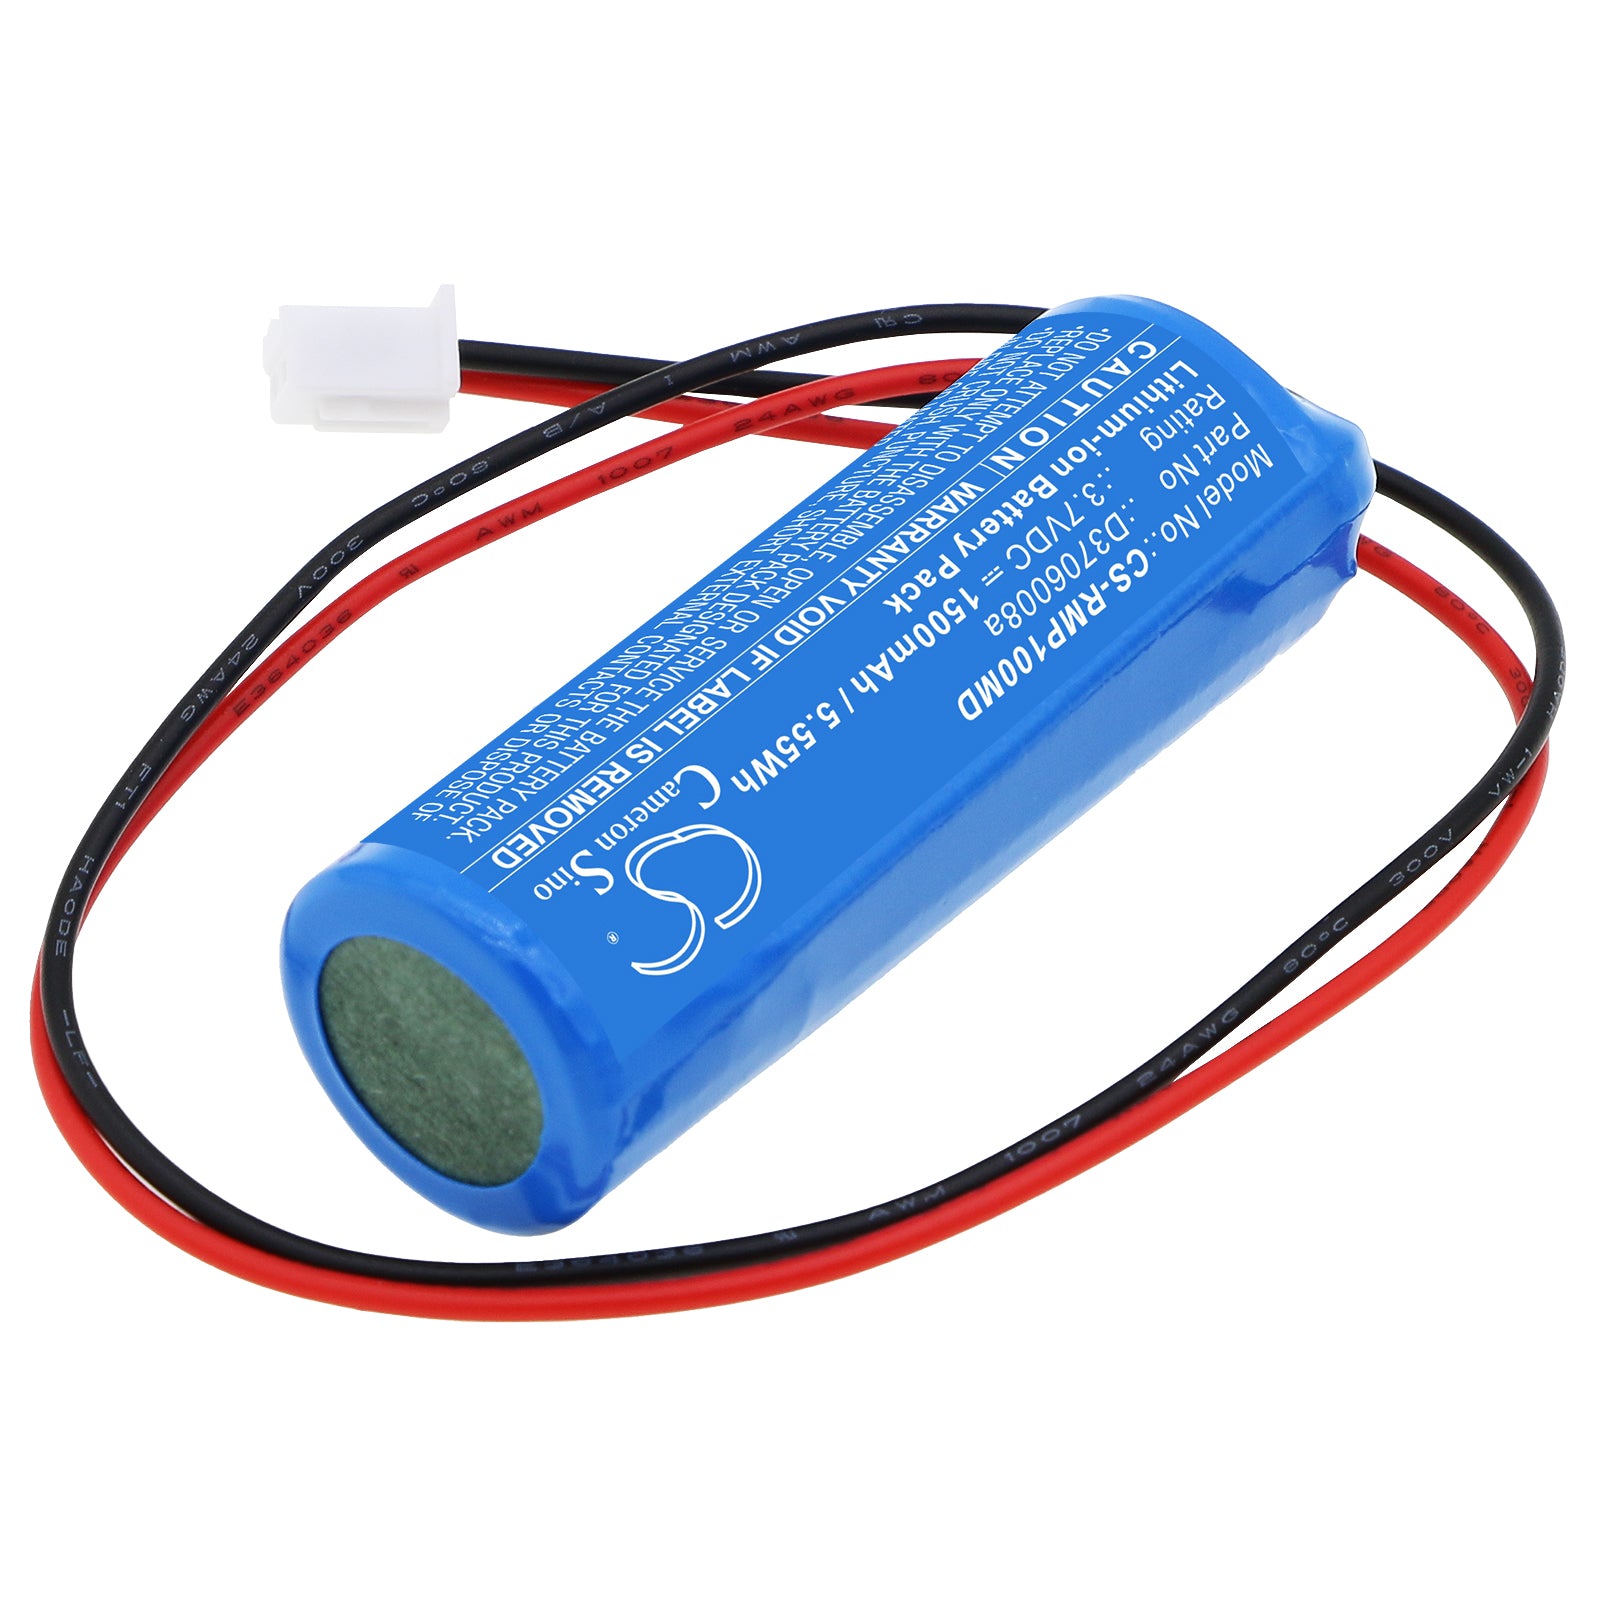 1500mAh D3706008a Battery for Revitive Medic Plus Circulation Booster, Tunstall Lifeline Vi, Lifeline Vi+-SMAVtronics